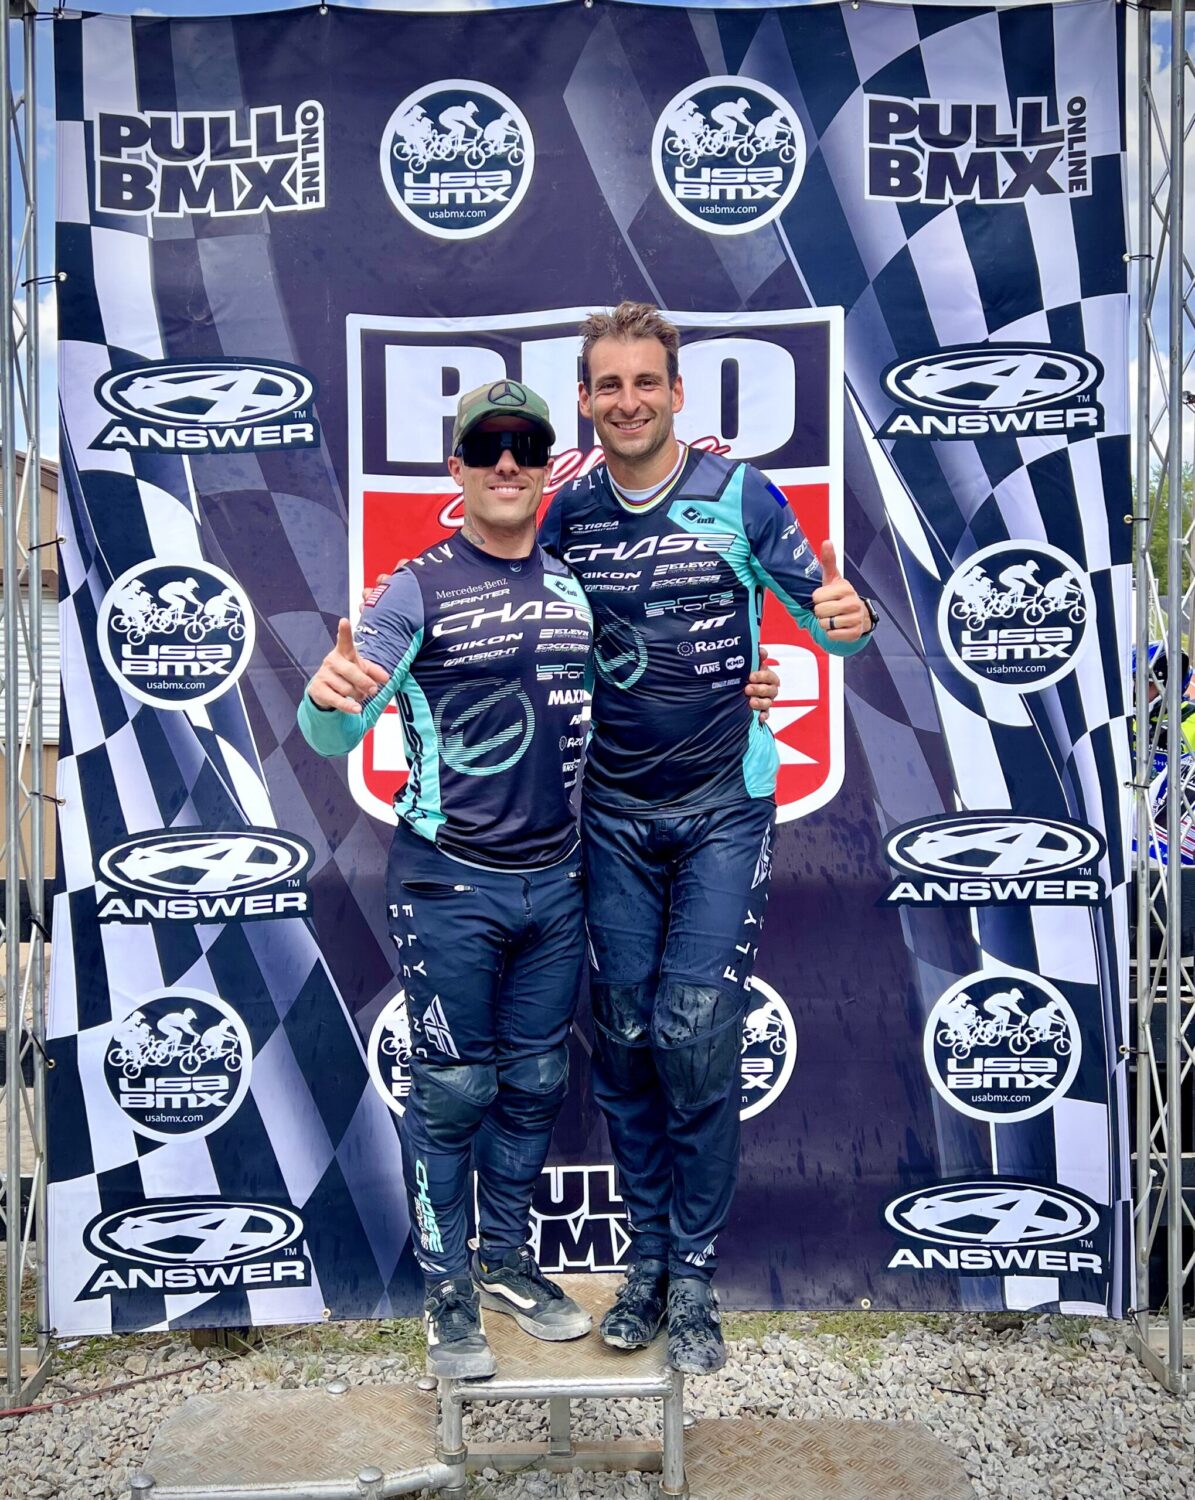 Joris and Barry win both Days of the USA BMX Derby City Nationals